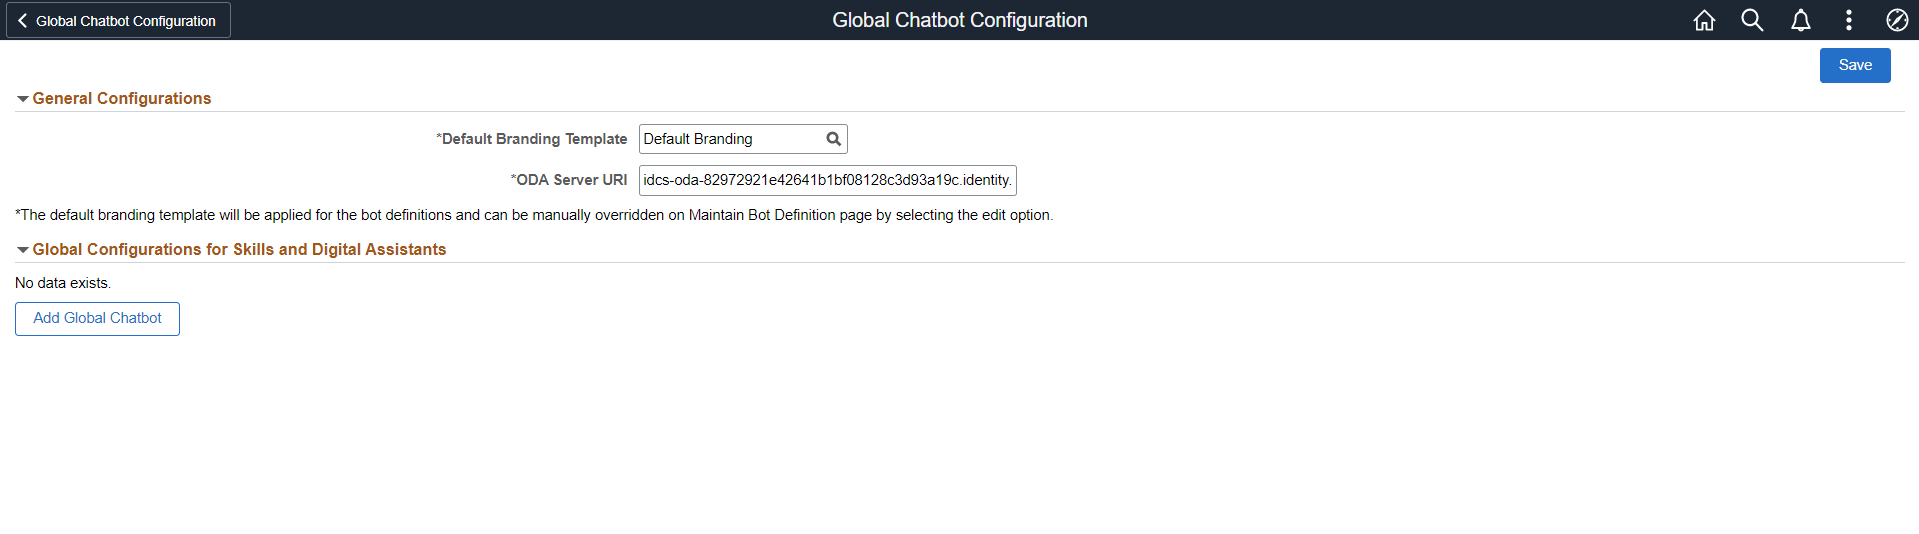 Global Chatbot Configuration